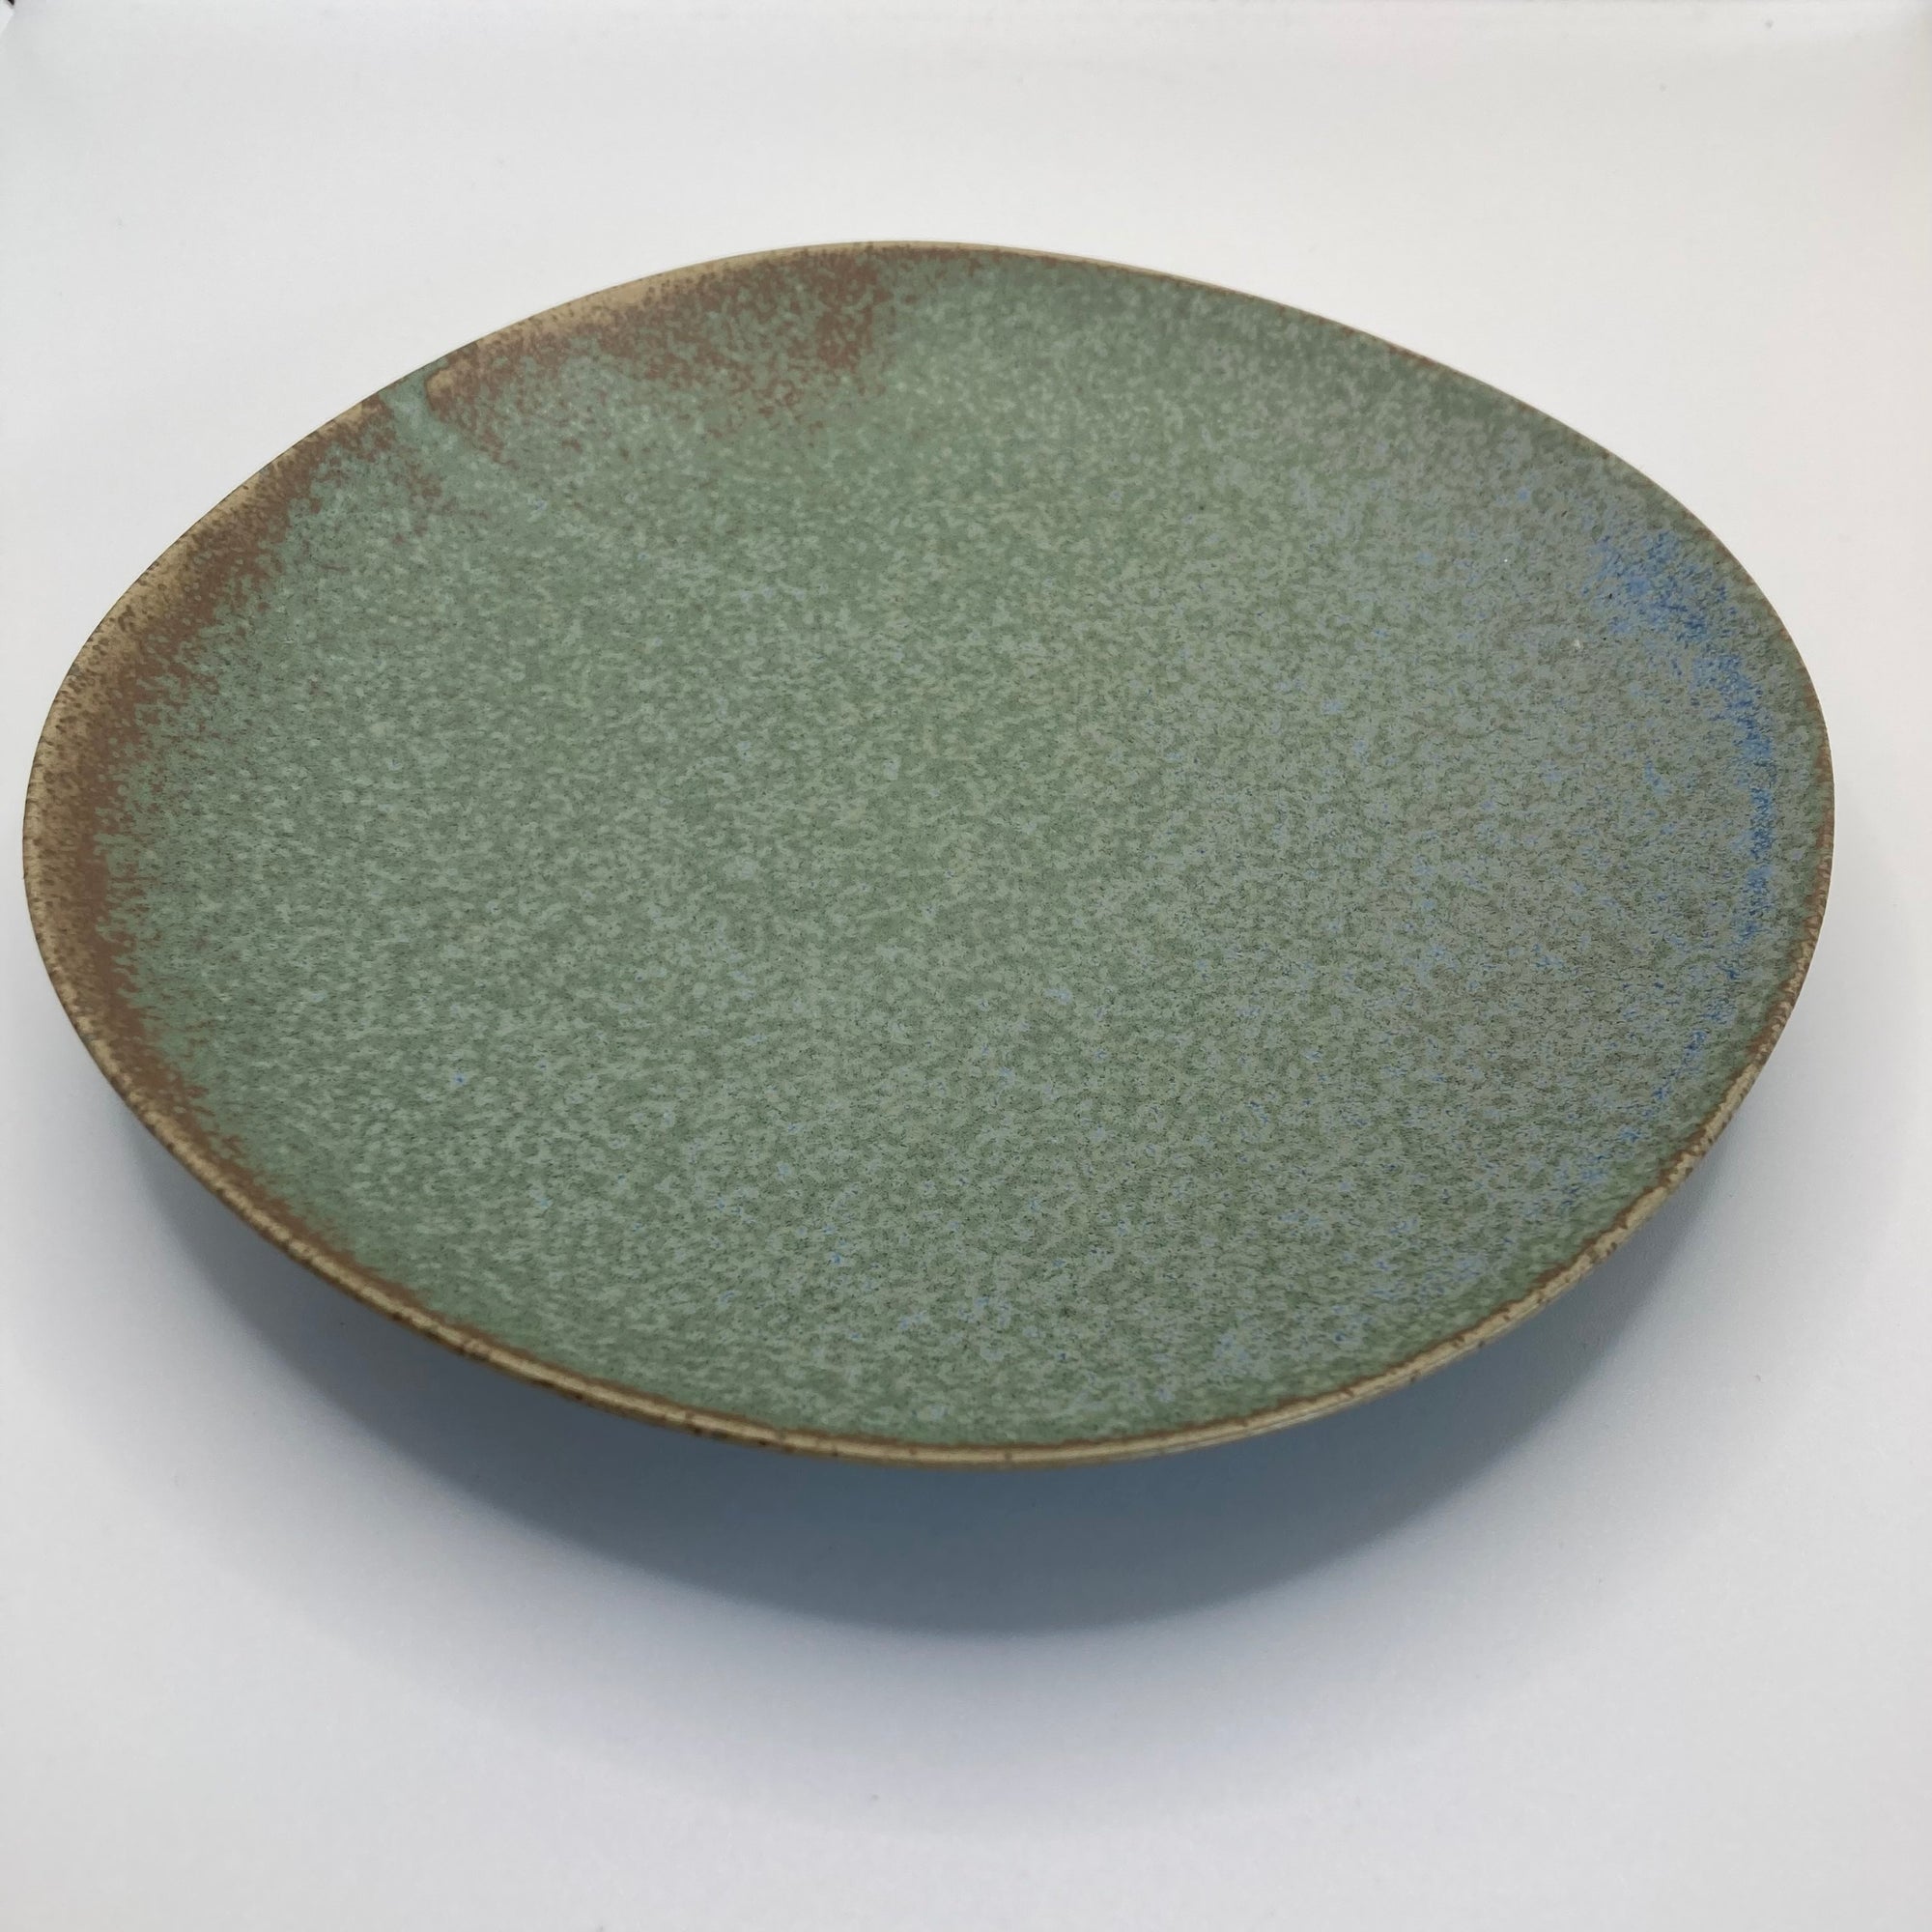 Jacob Little-Dulwich Hill-Wabisabi Side Plate -Japanese-Green